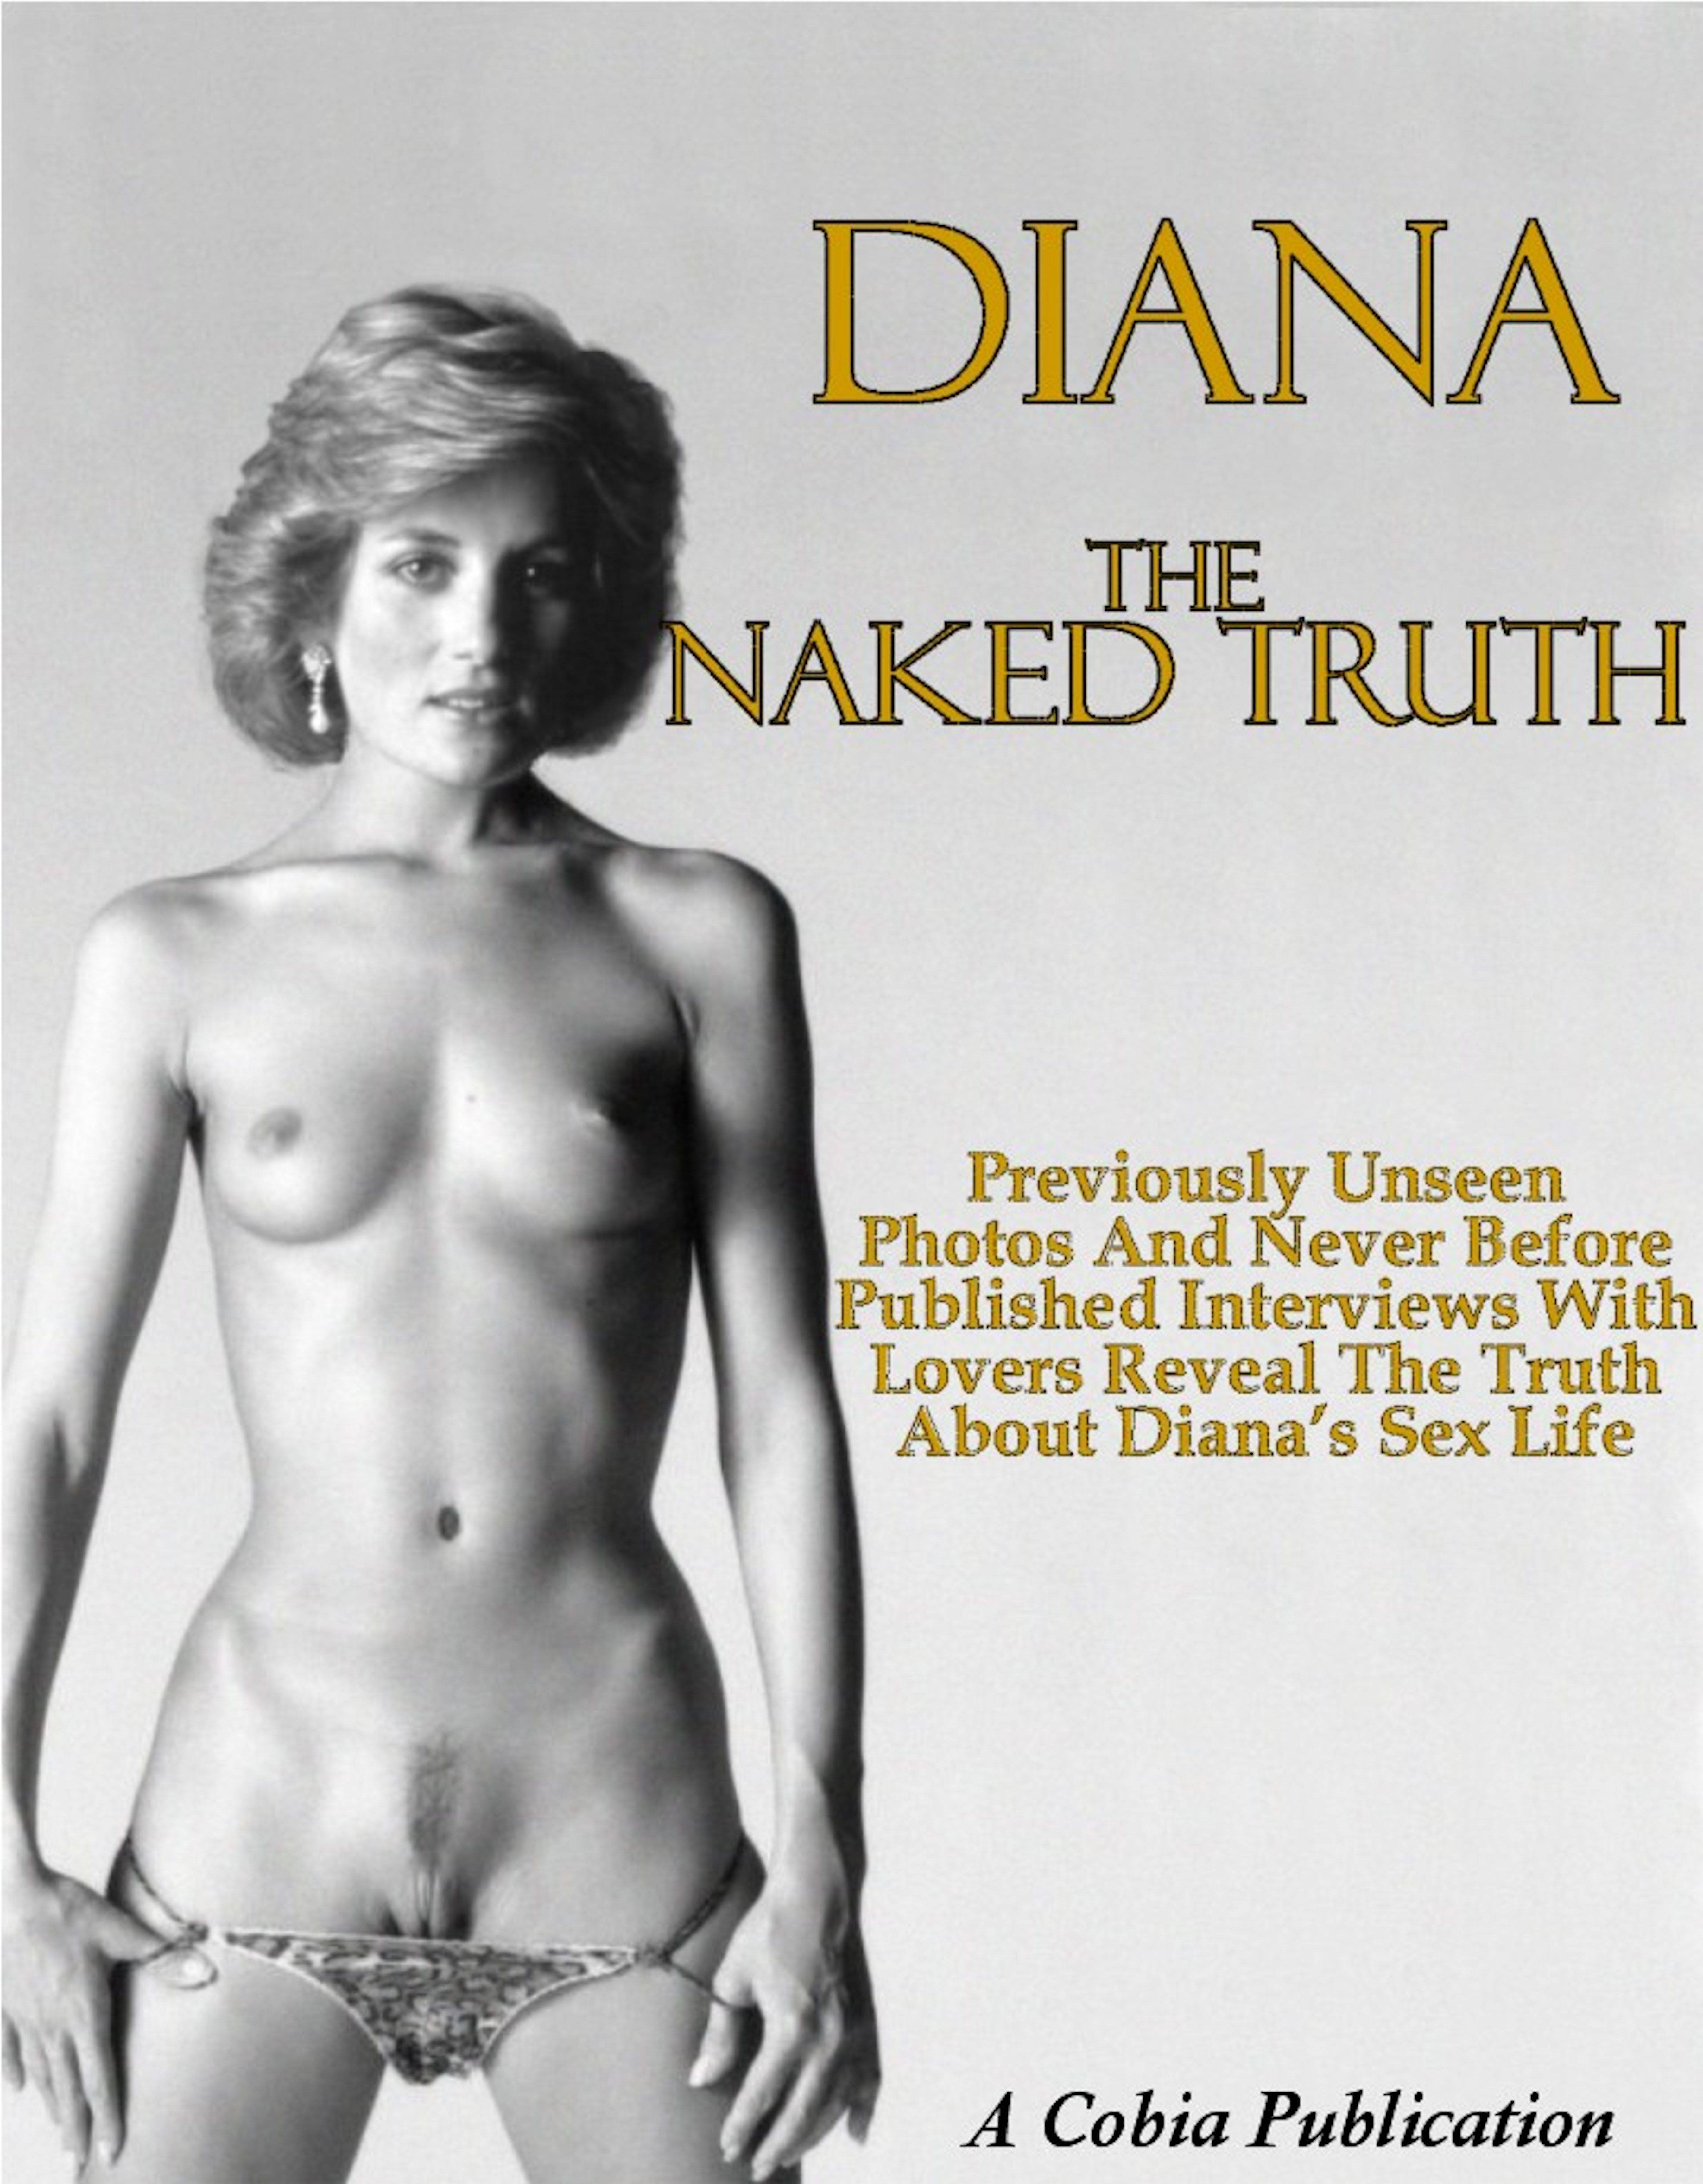 danny james watson add photo princess diana nude pics